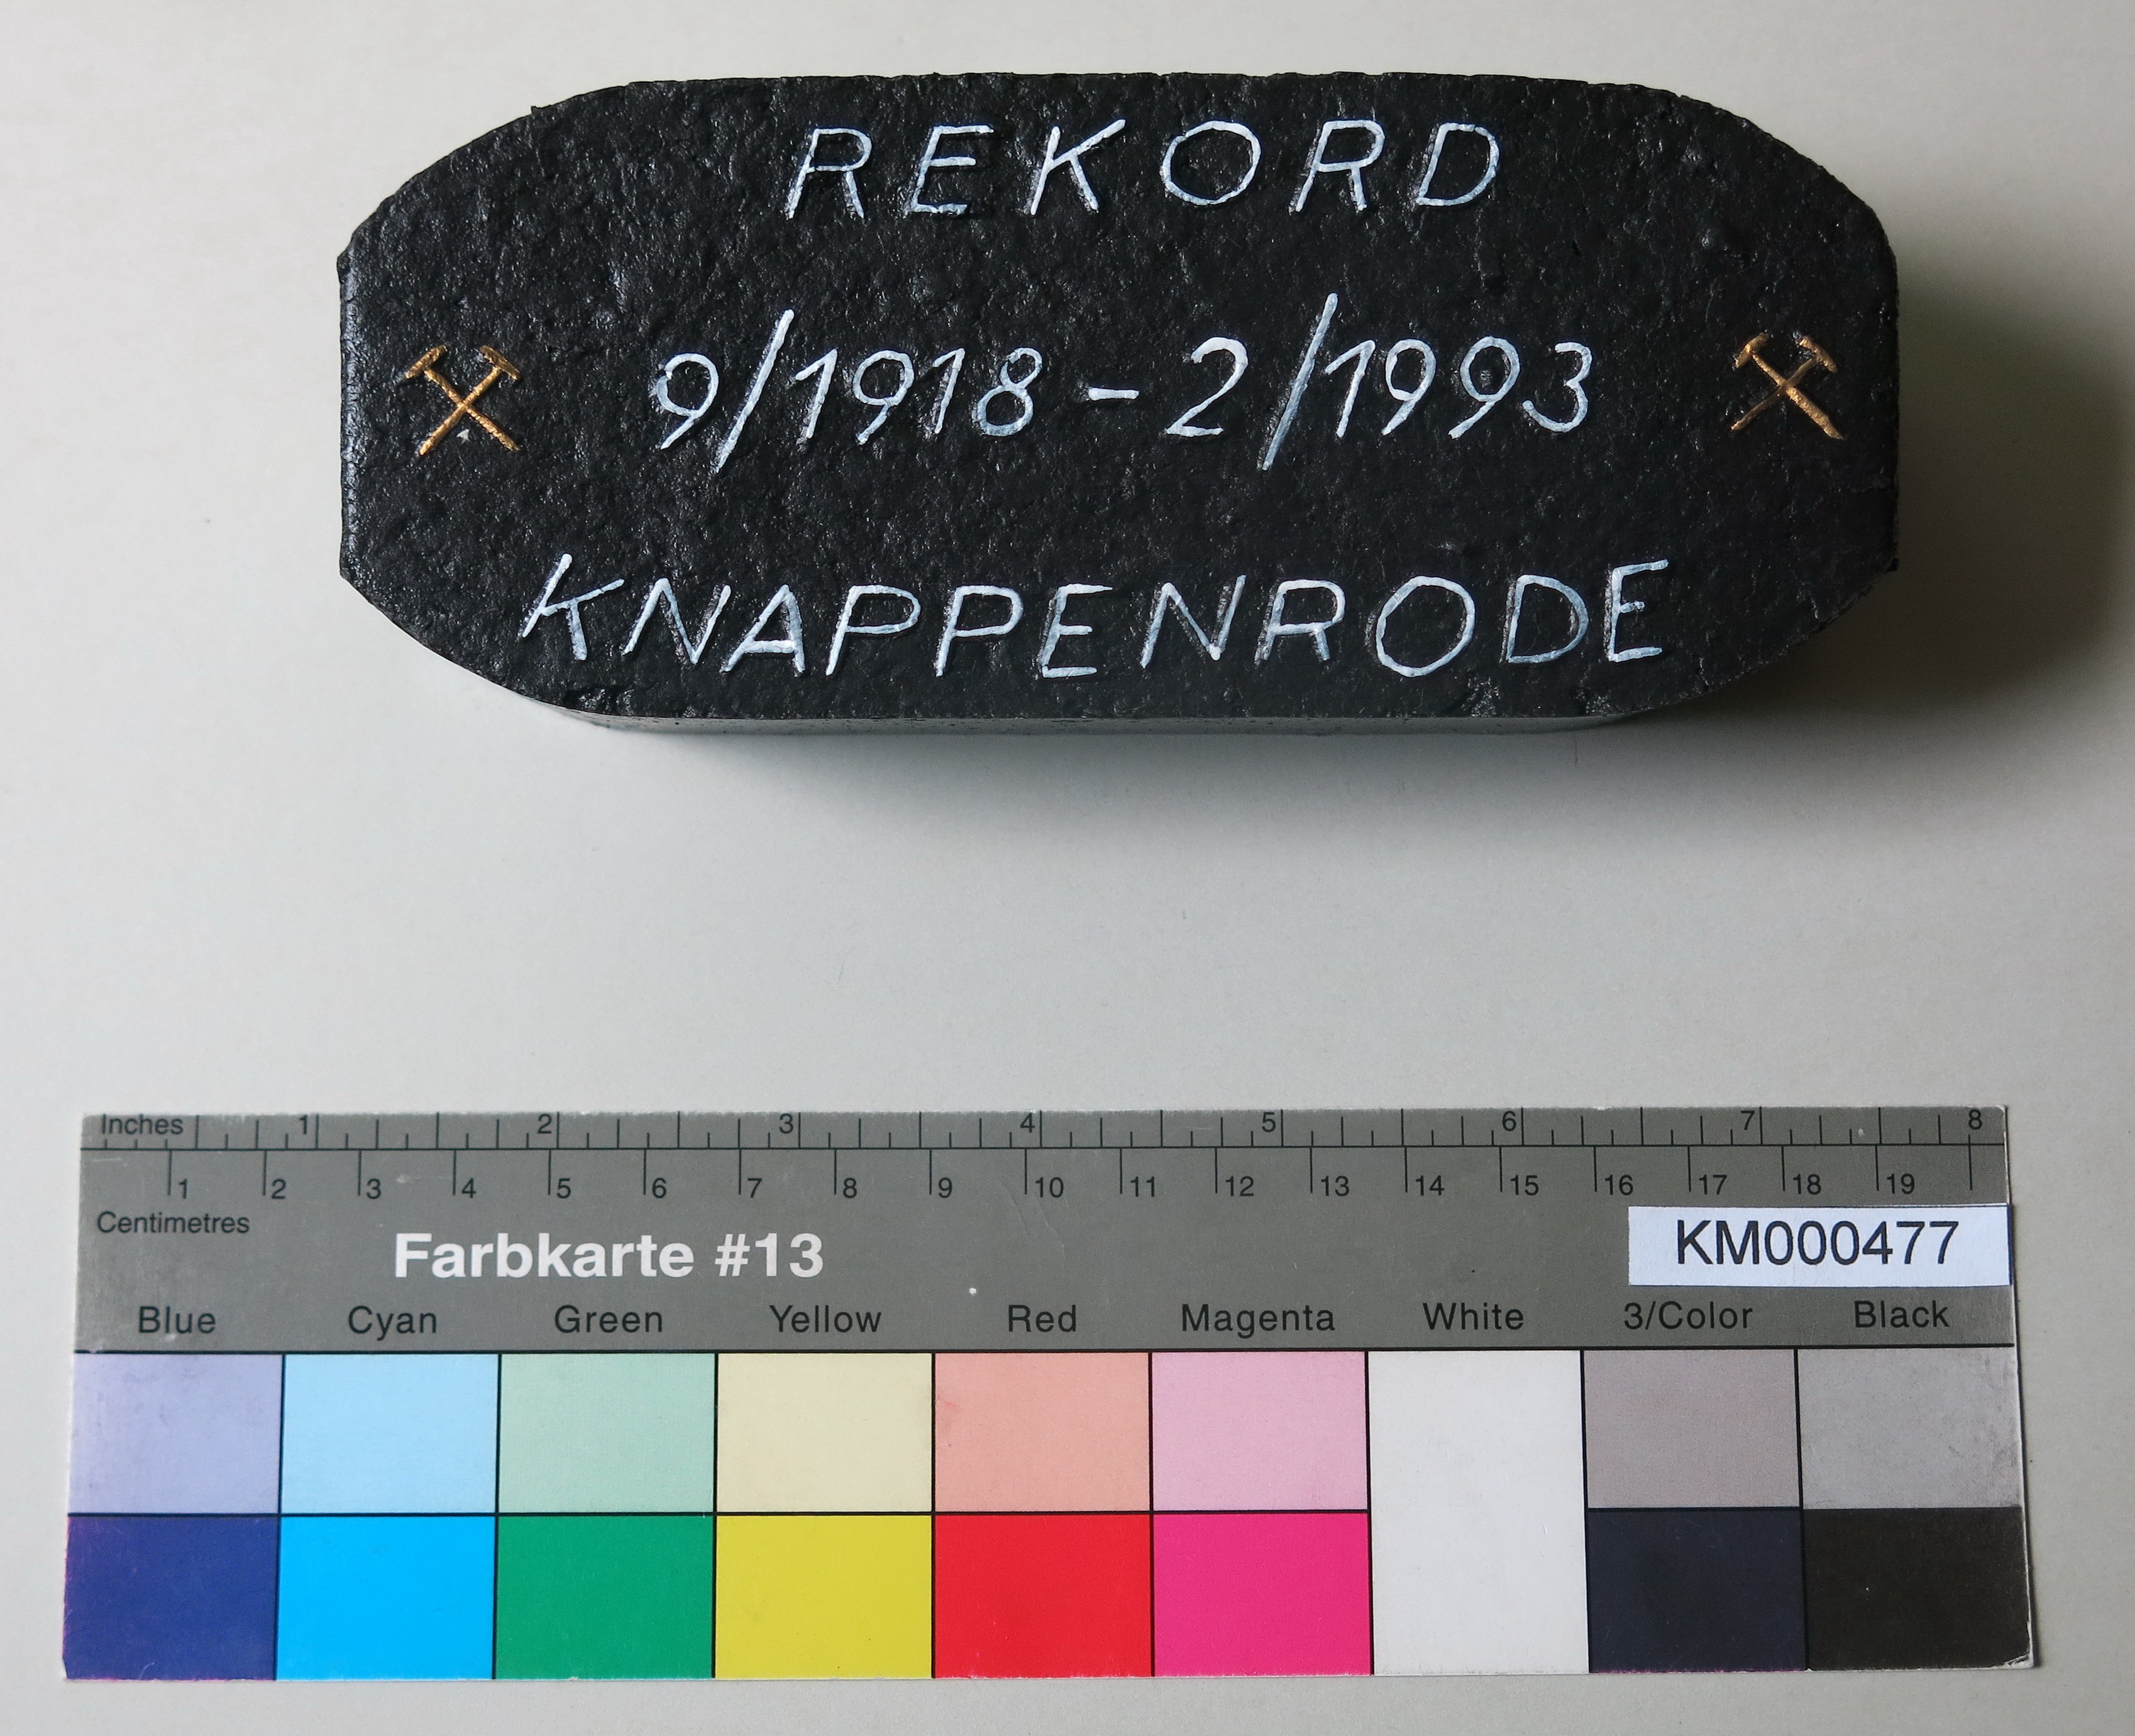 Zierbrikett "REKORD 9/1918 - 2/1993 KNAPPENRODE" (Energiefabrik Knappenrode CC BY-SA)